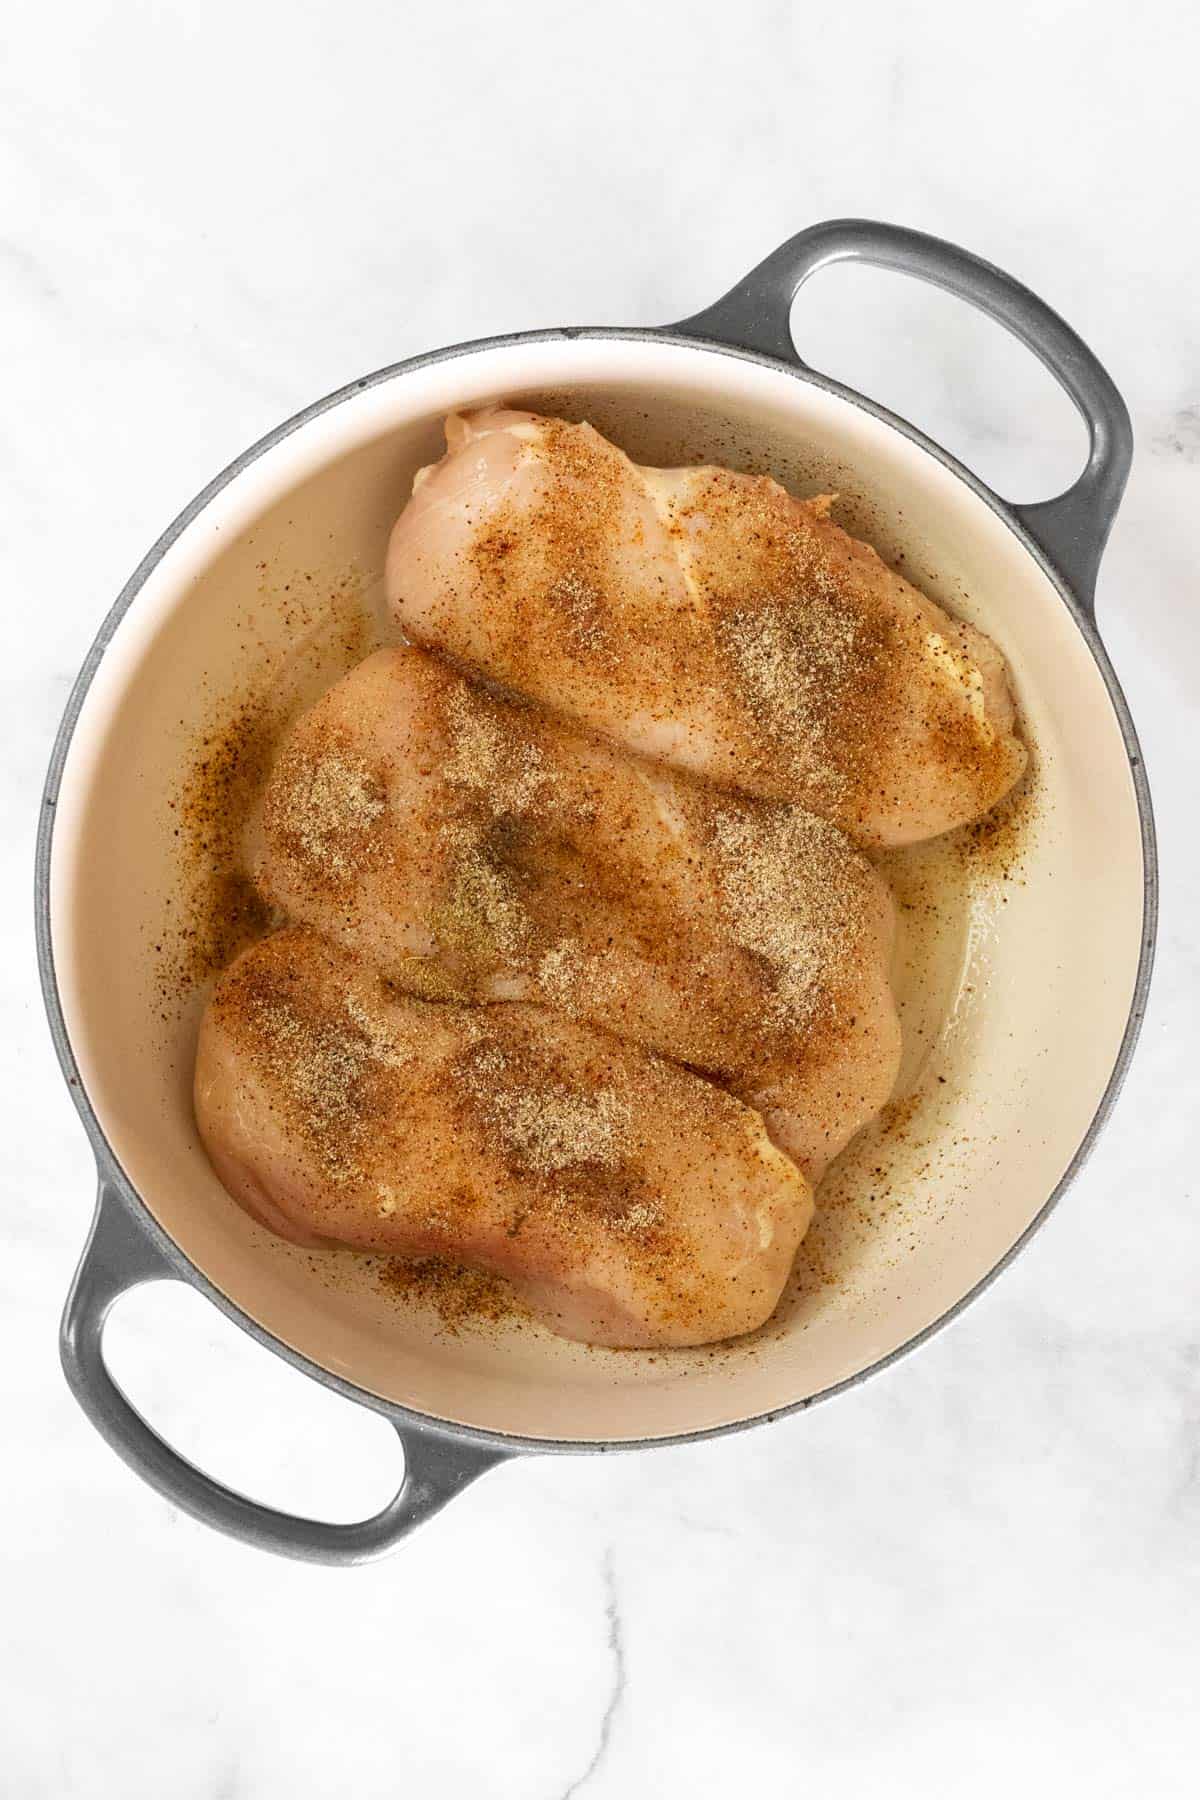 Raw chicken breasts seasoned in a dutch oven.